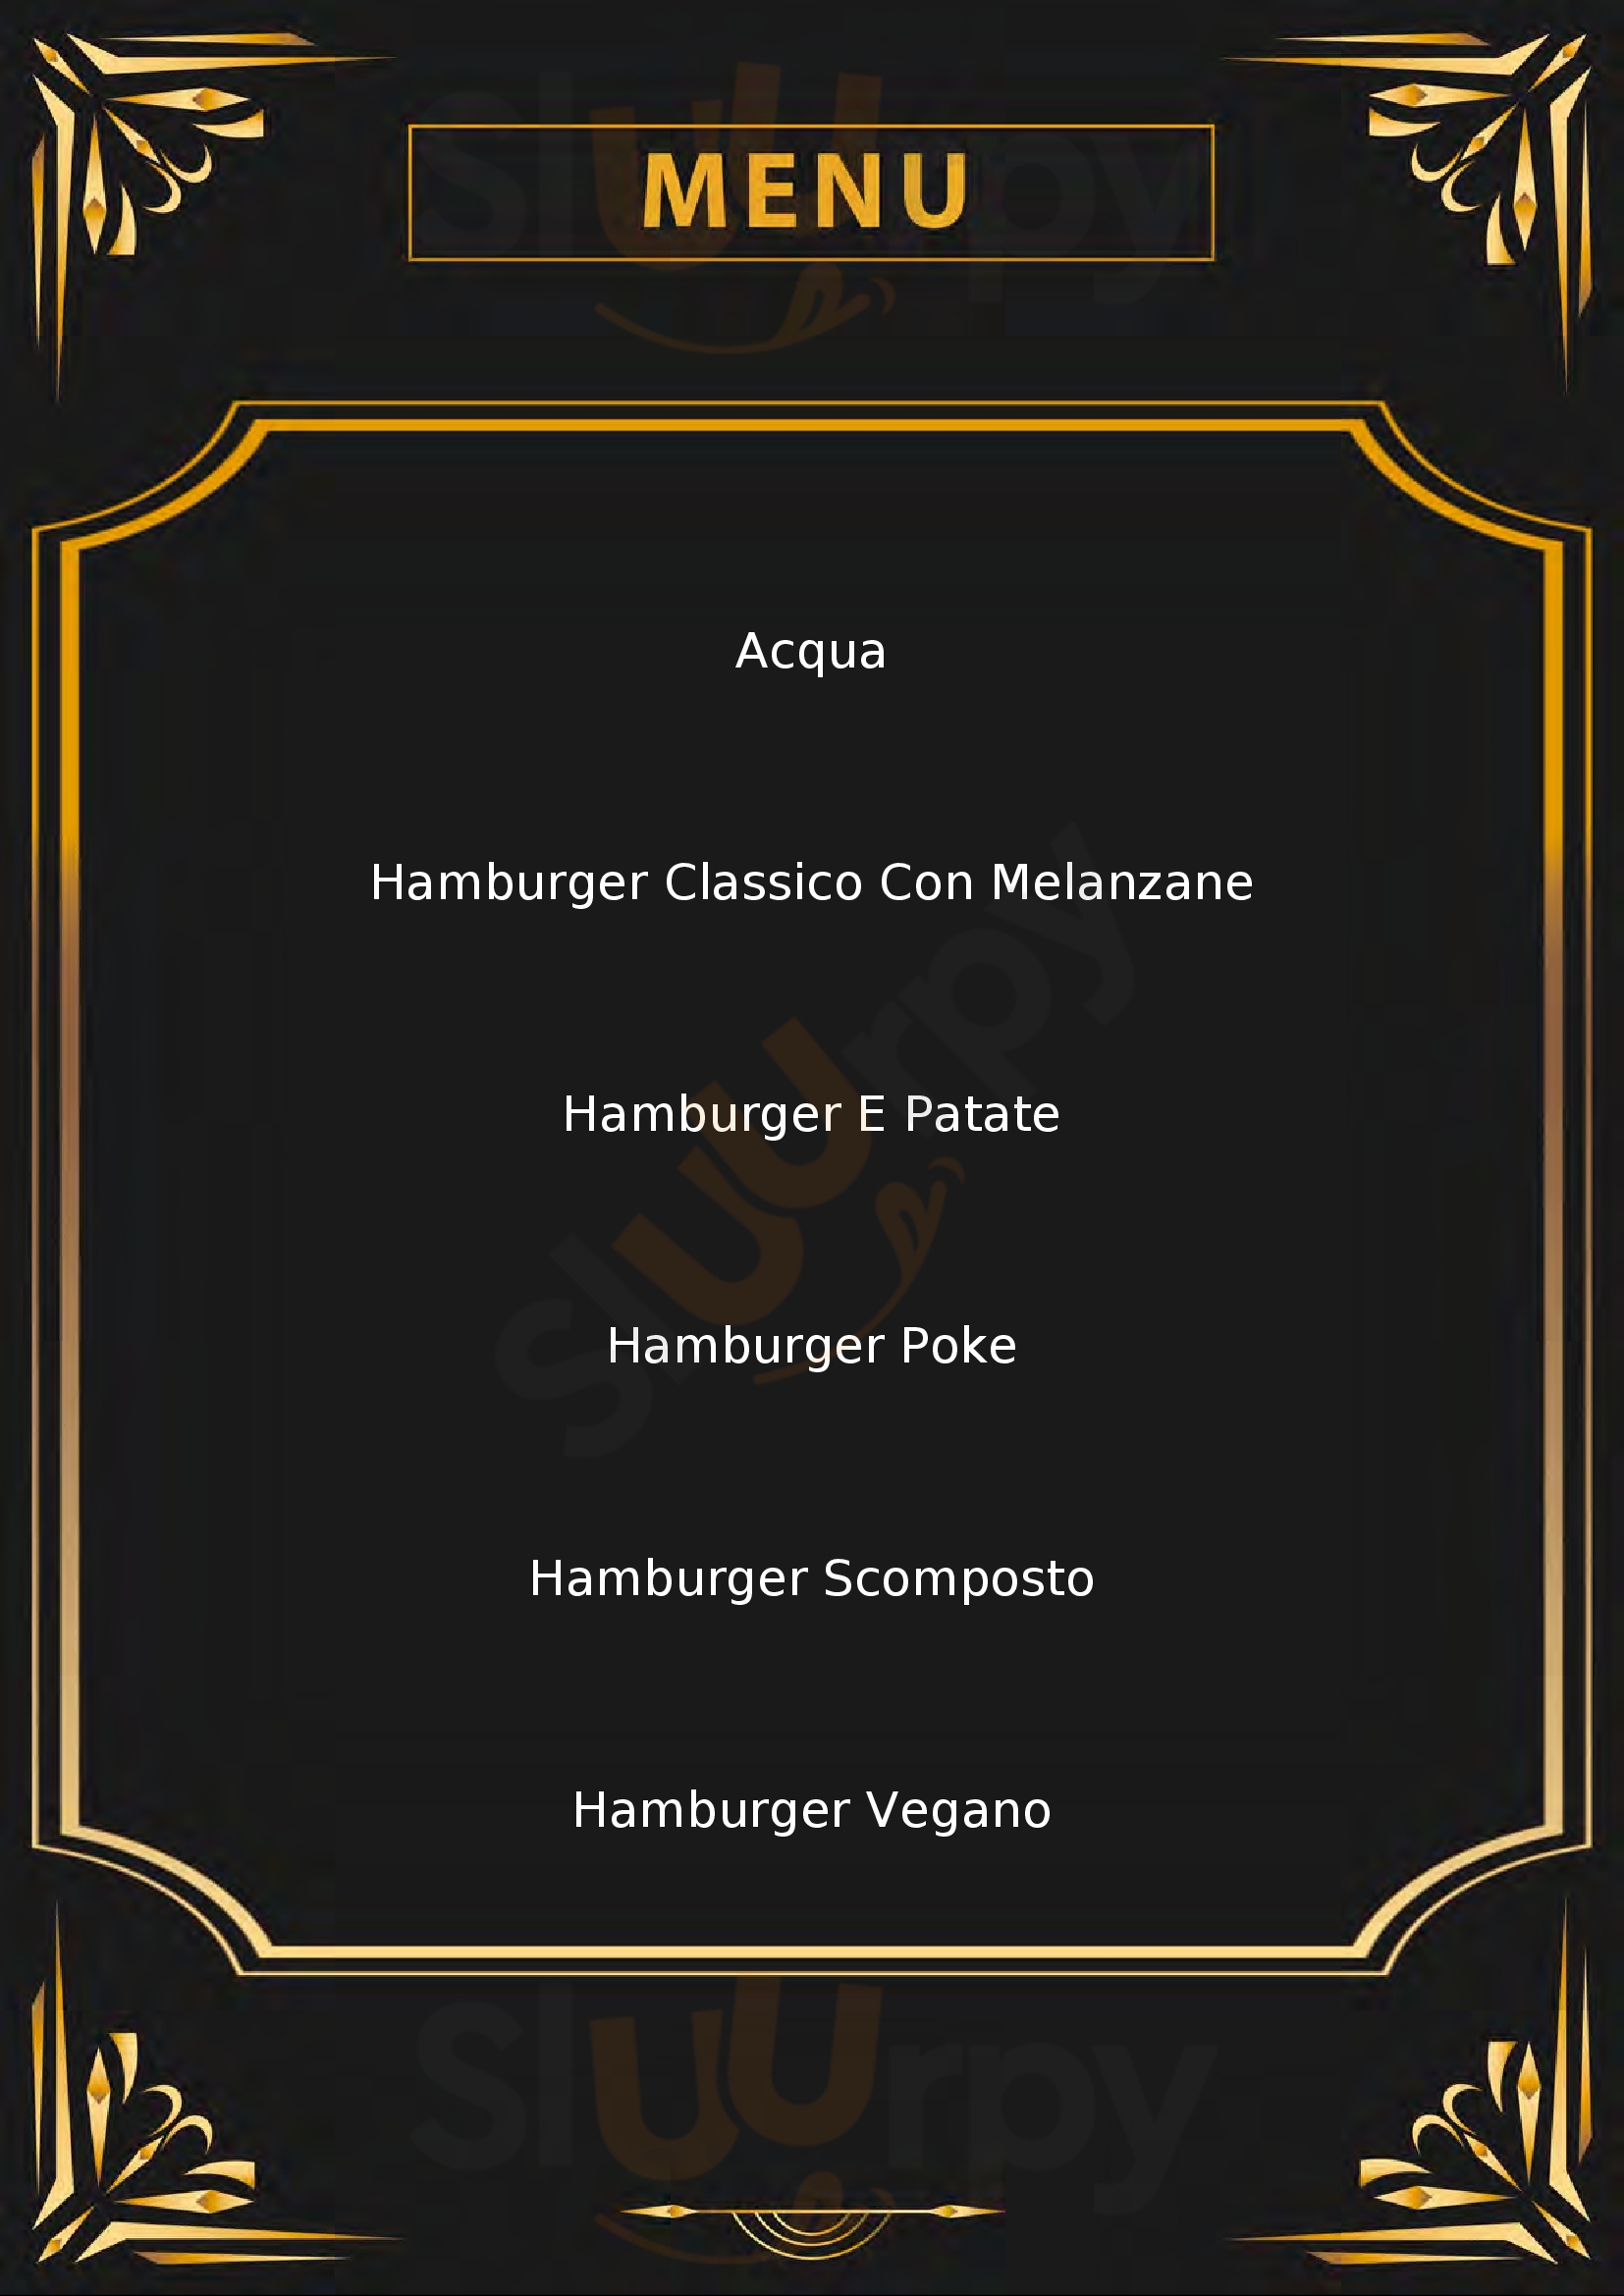 Ham Holy Burger Settimo Torinese menù 1 pagina